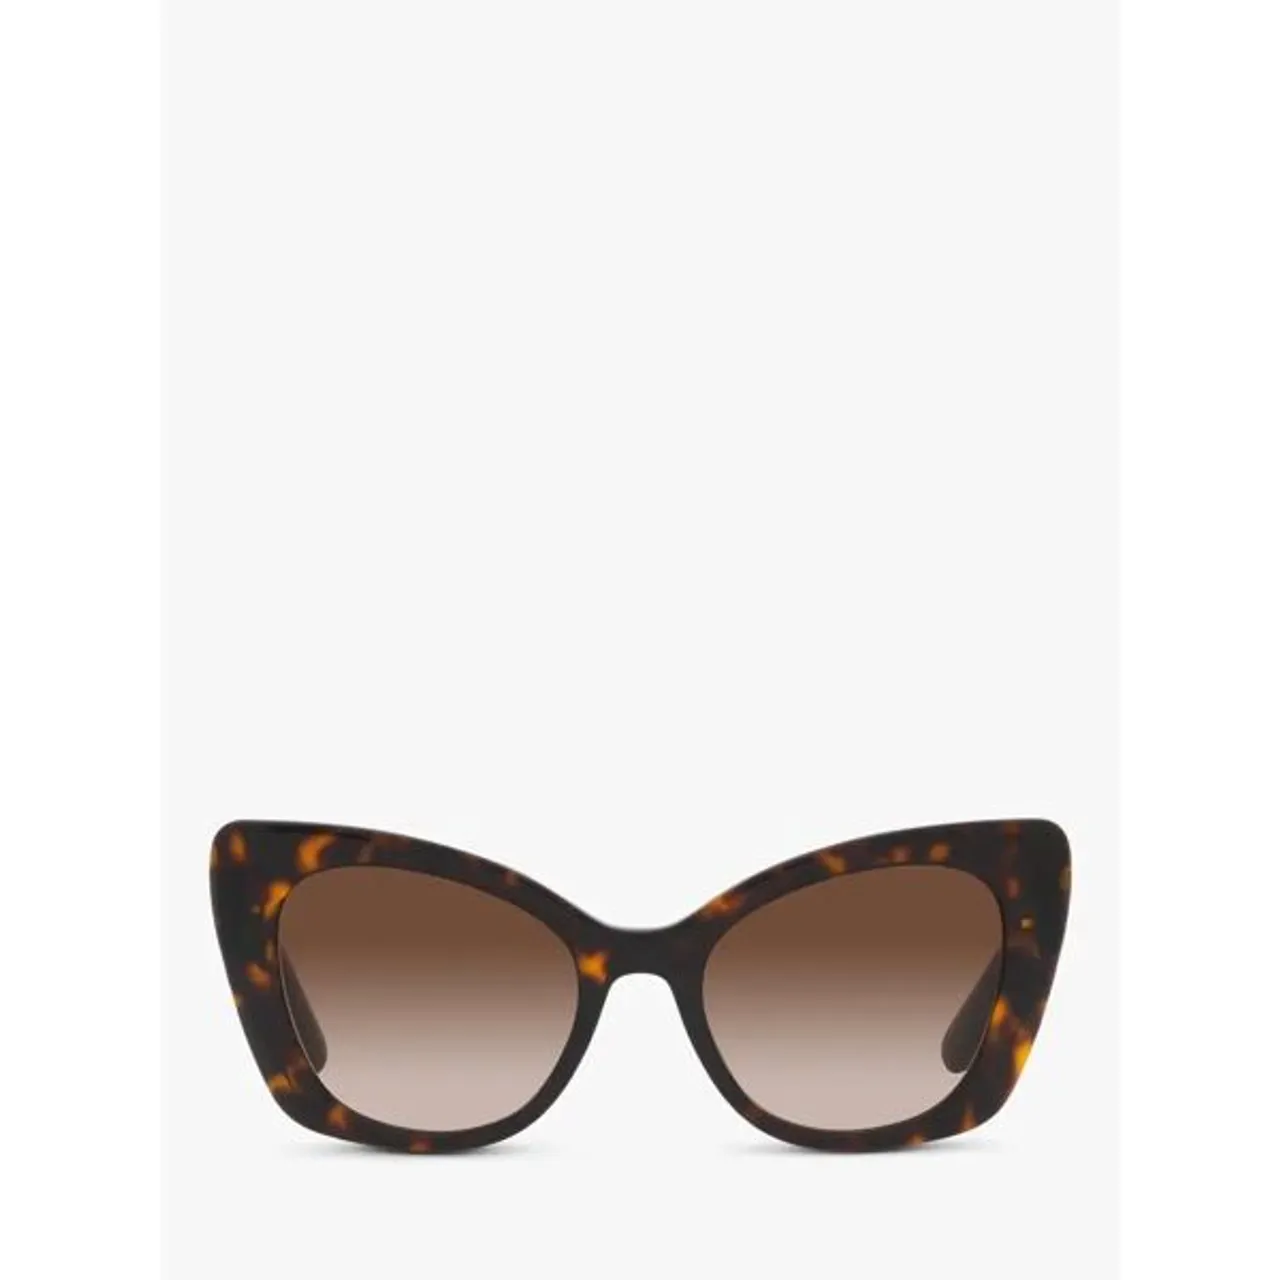 Dolce & Gabbana DG4405 Women's Butterfly Sunglasses - Tortoise/Brown Gradient - Female